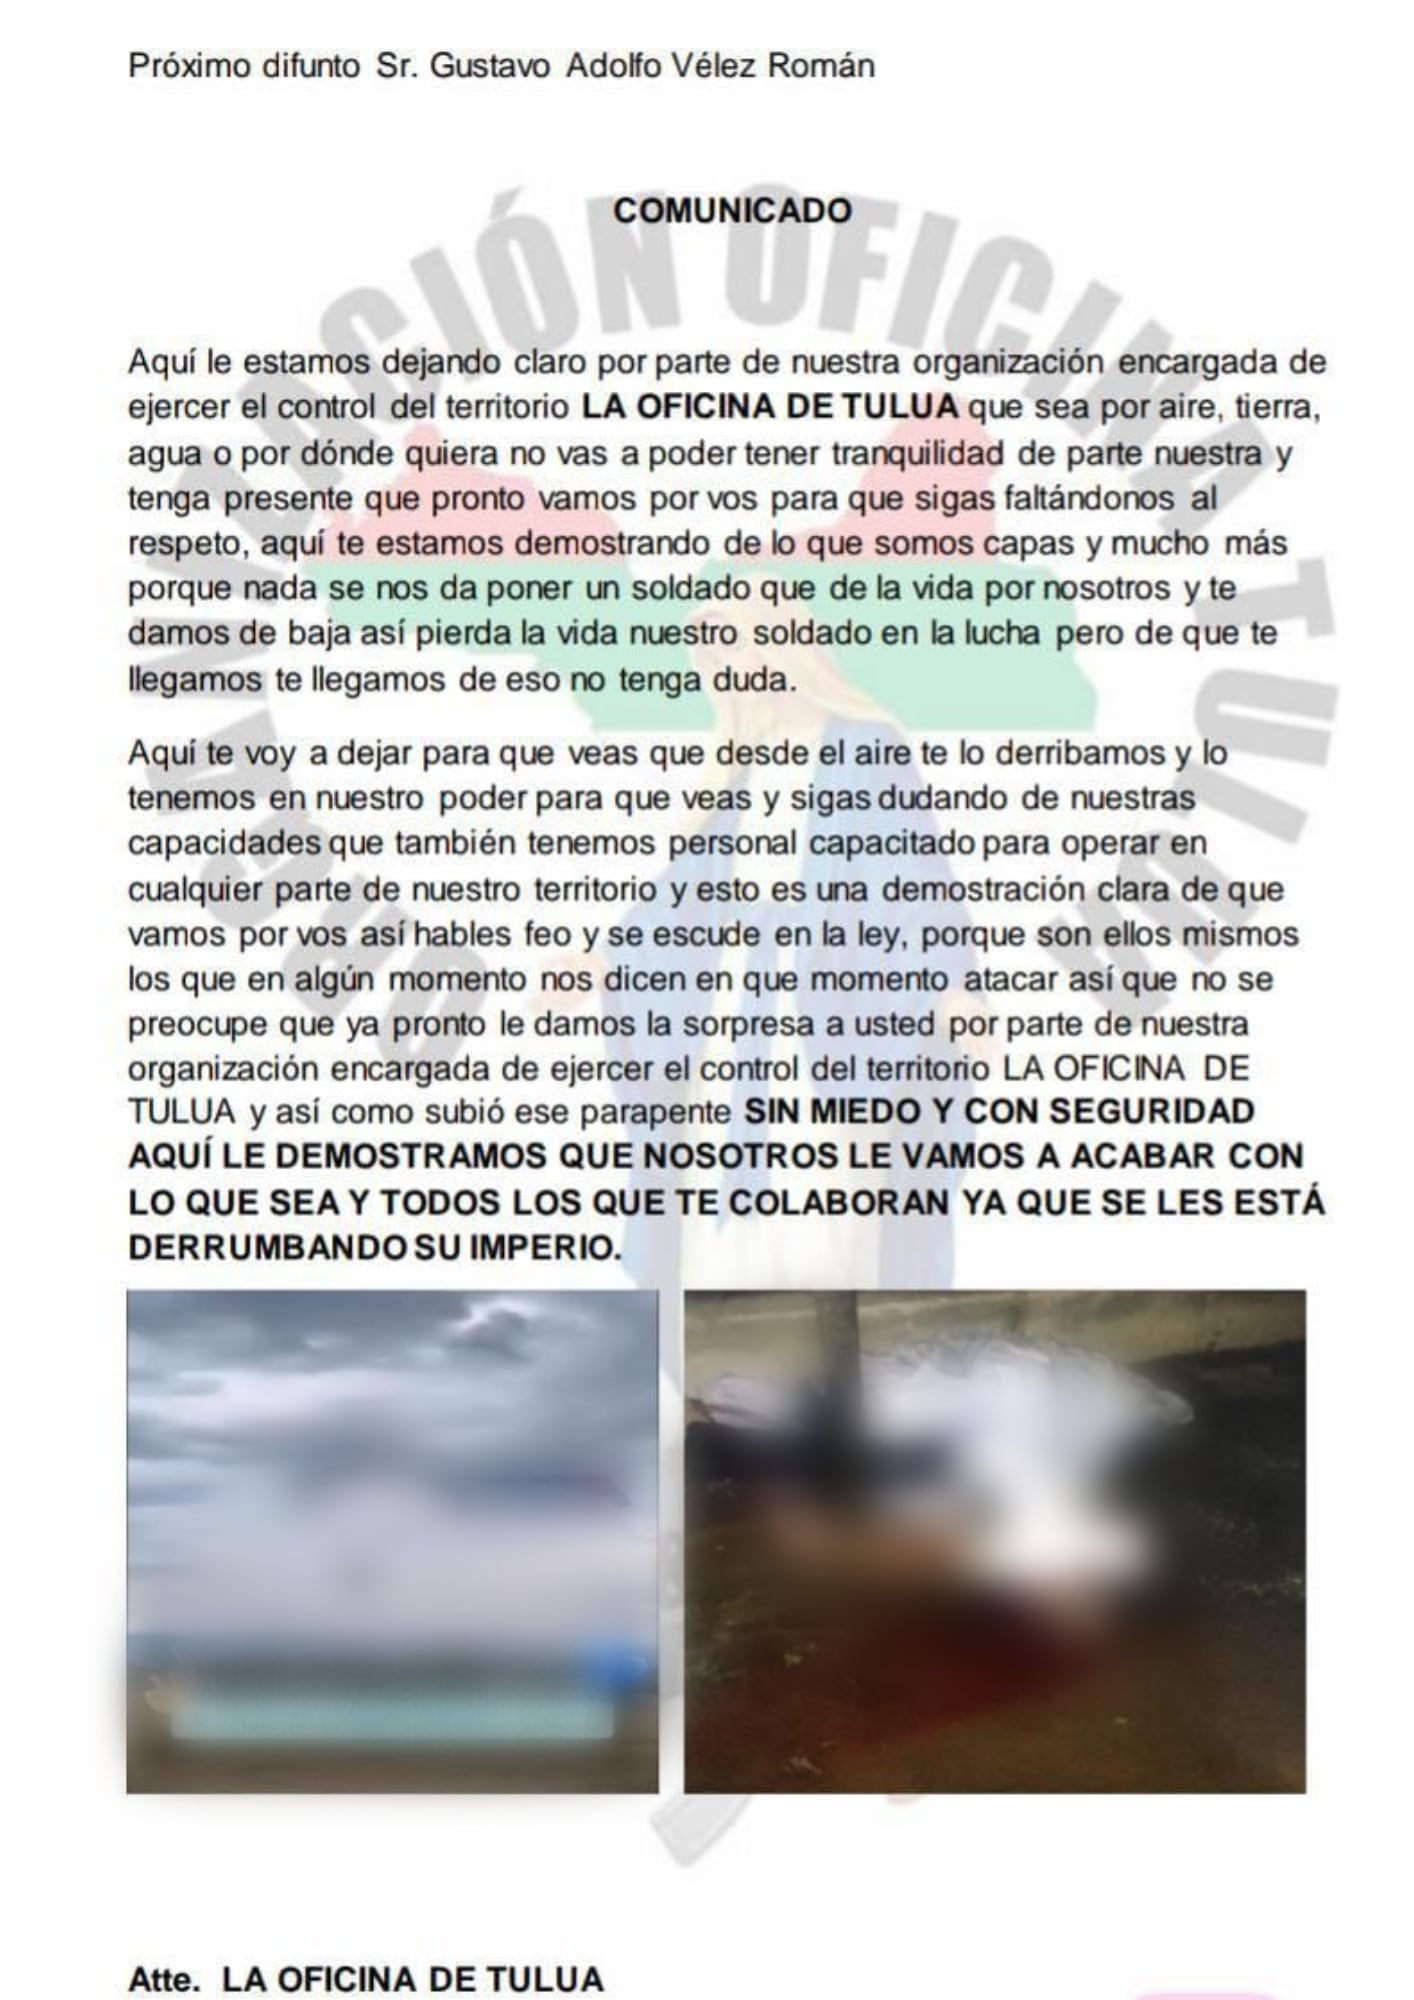 Banda 'La Oficina de Tuluá' se atribuyó el asesinato del parapentista en polémico panfleto: esto dijeron - Infobae